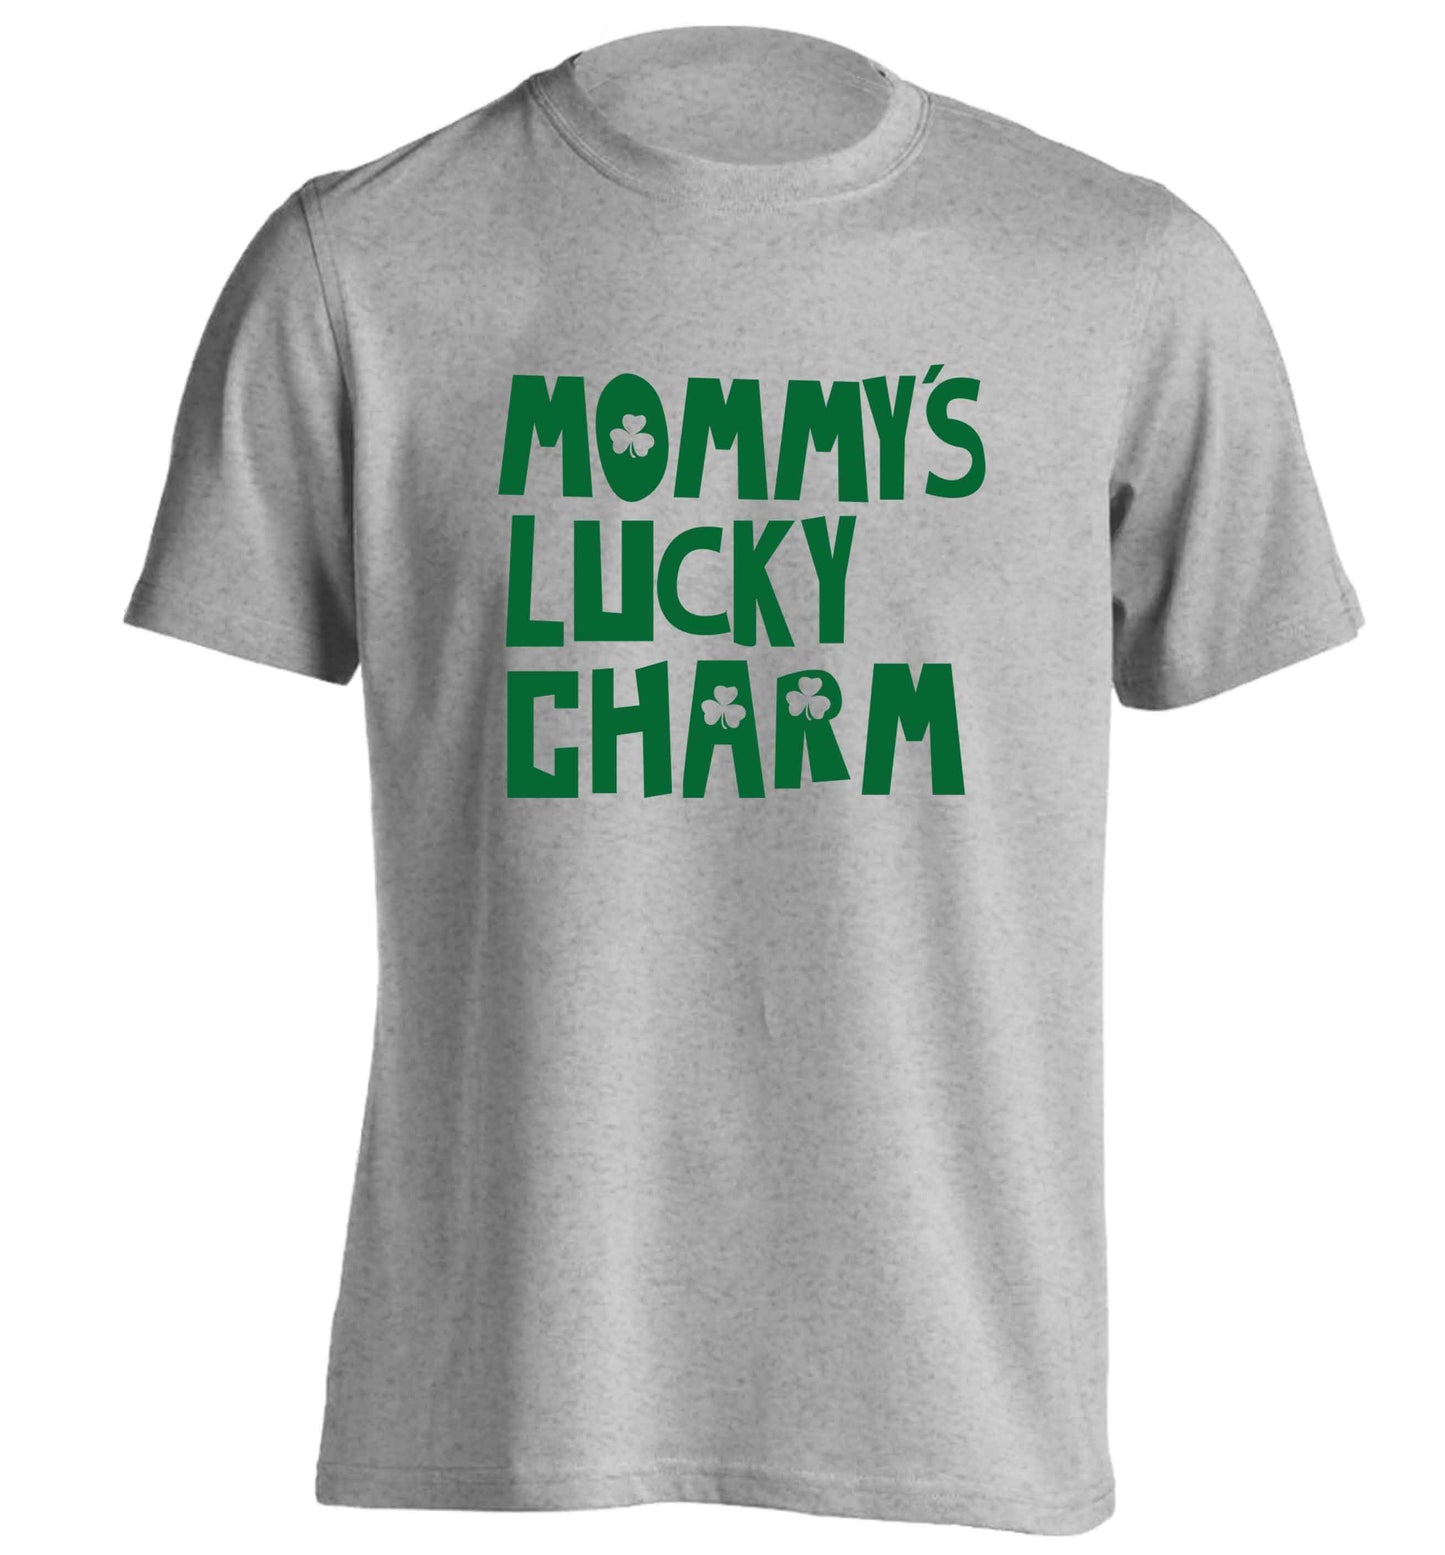 Mommy's lucky charm adults unisex grey Tshirt 2XL